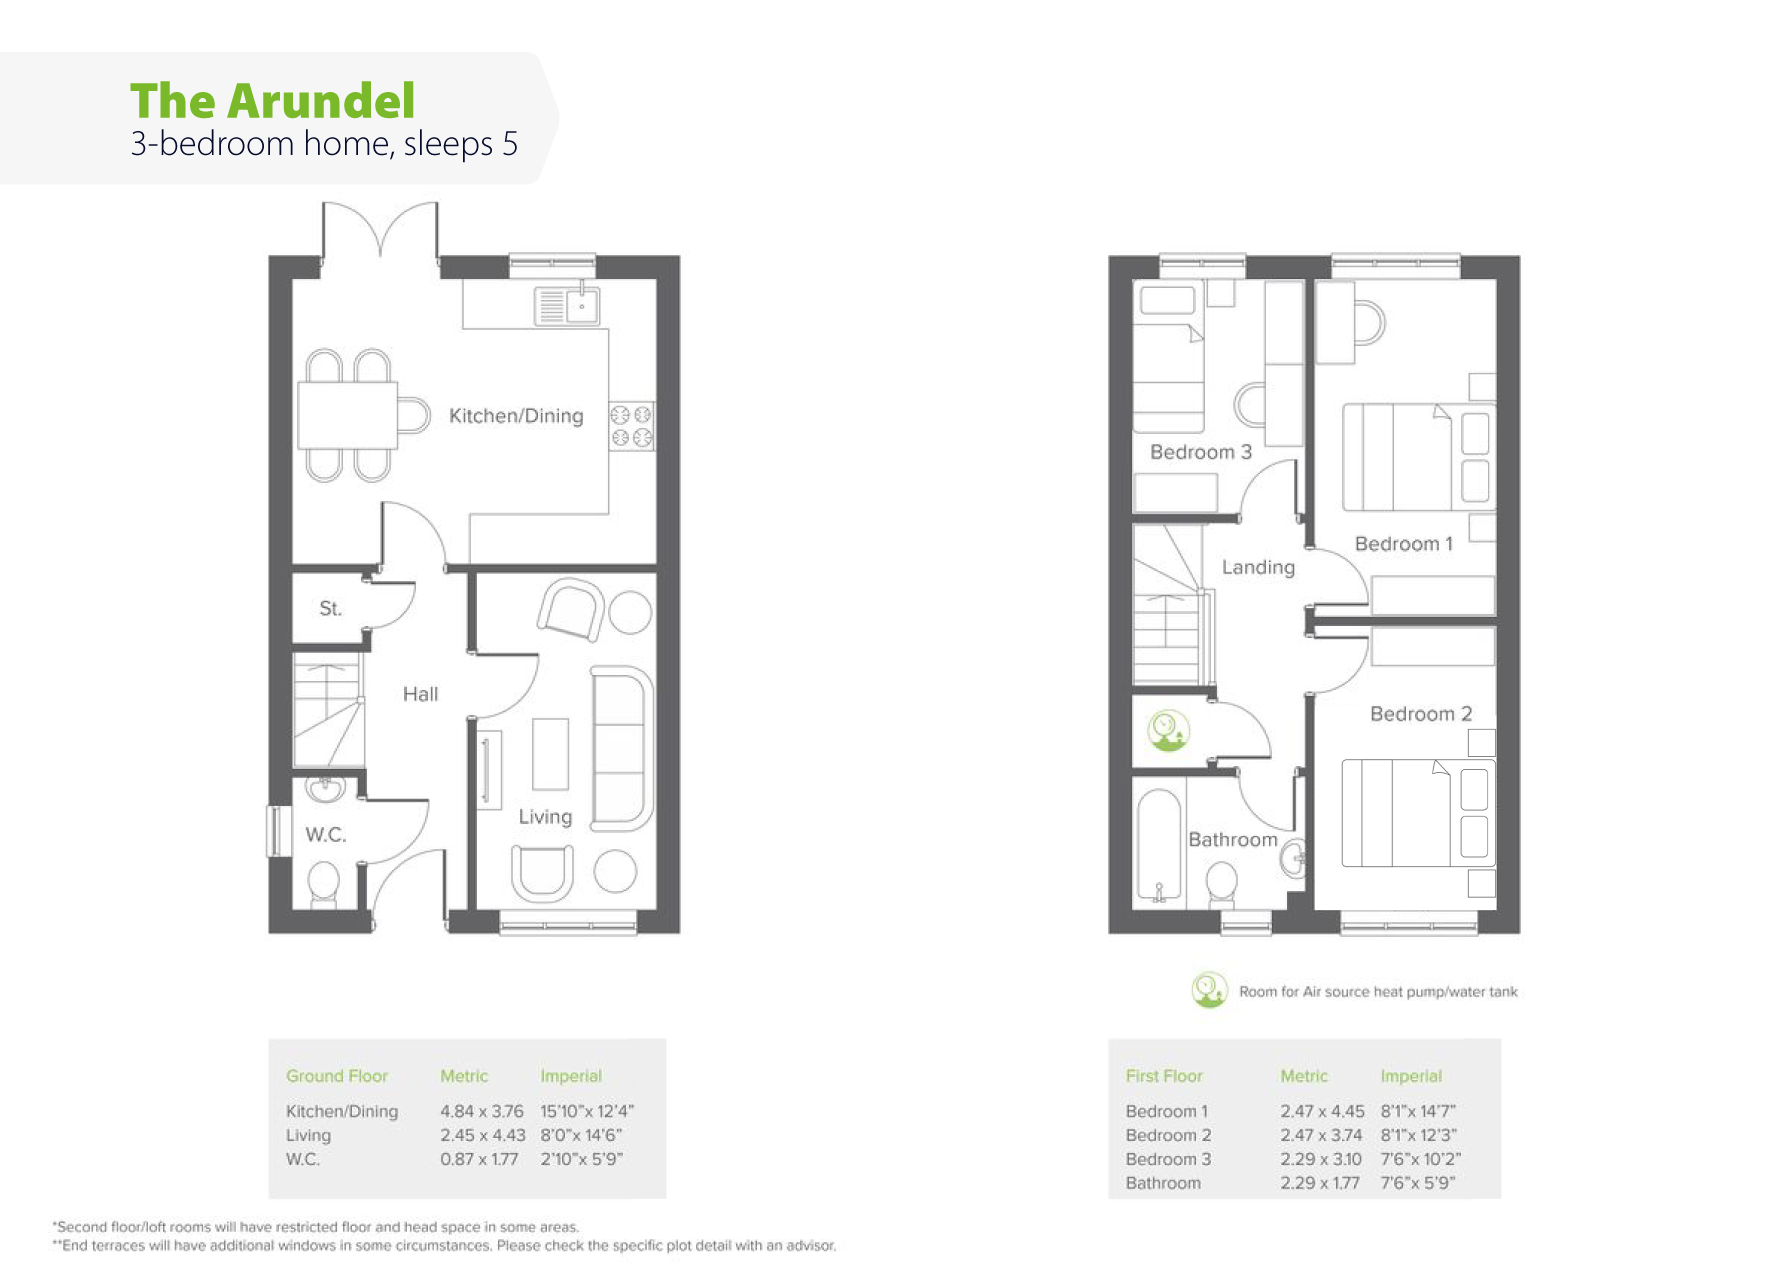 The Arundel floorplan